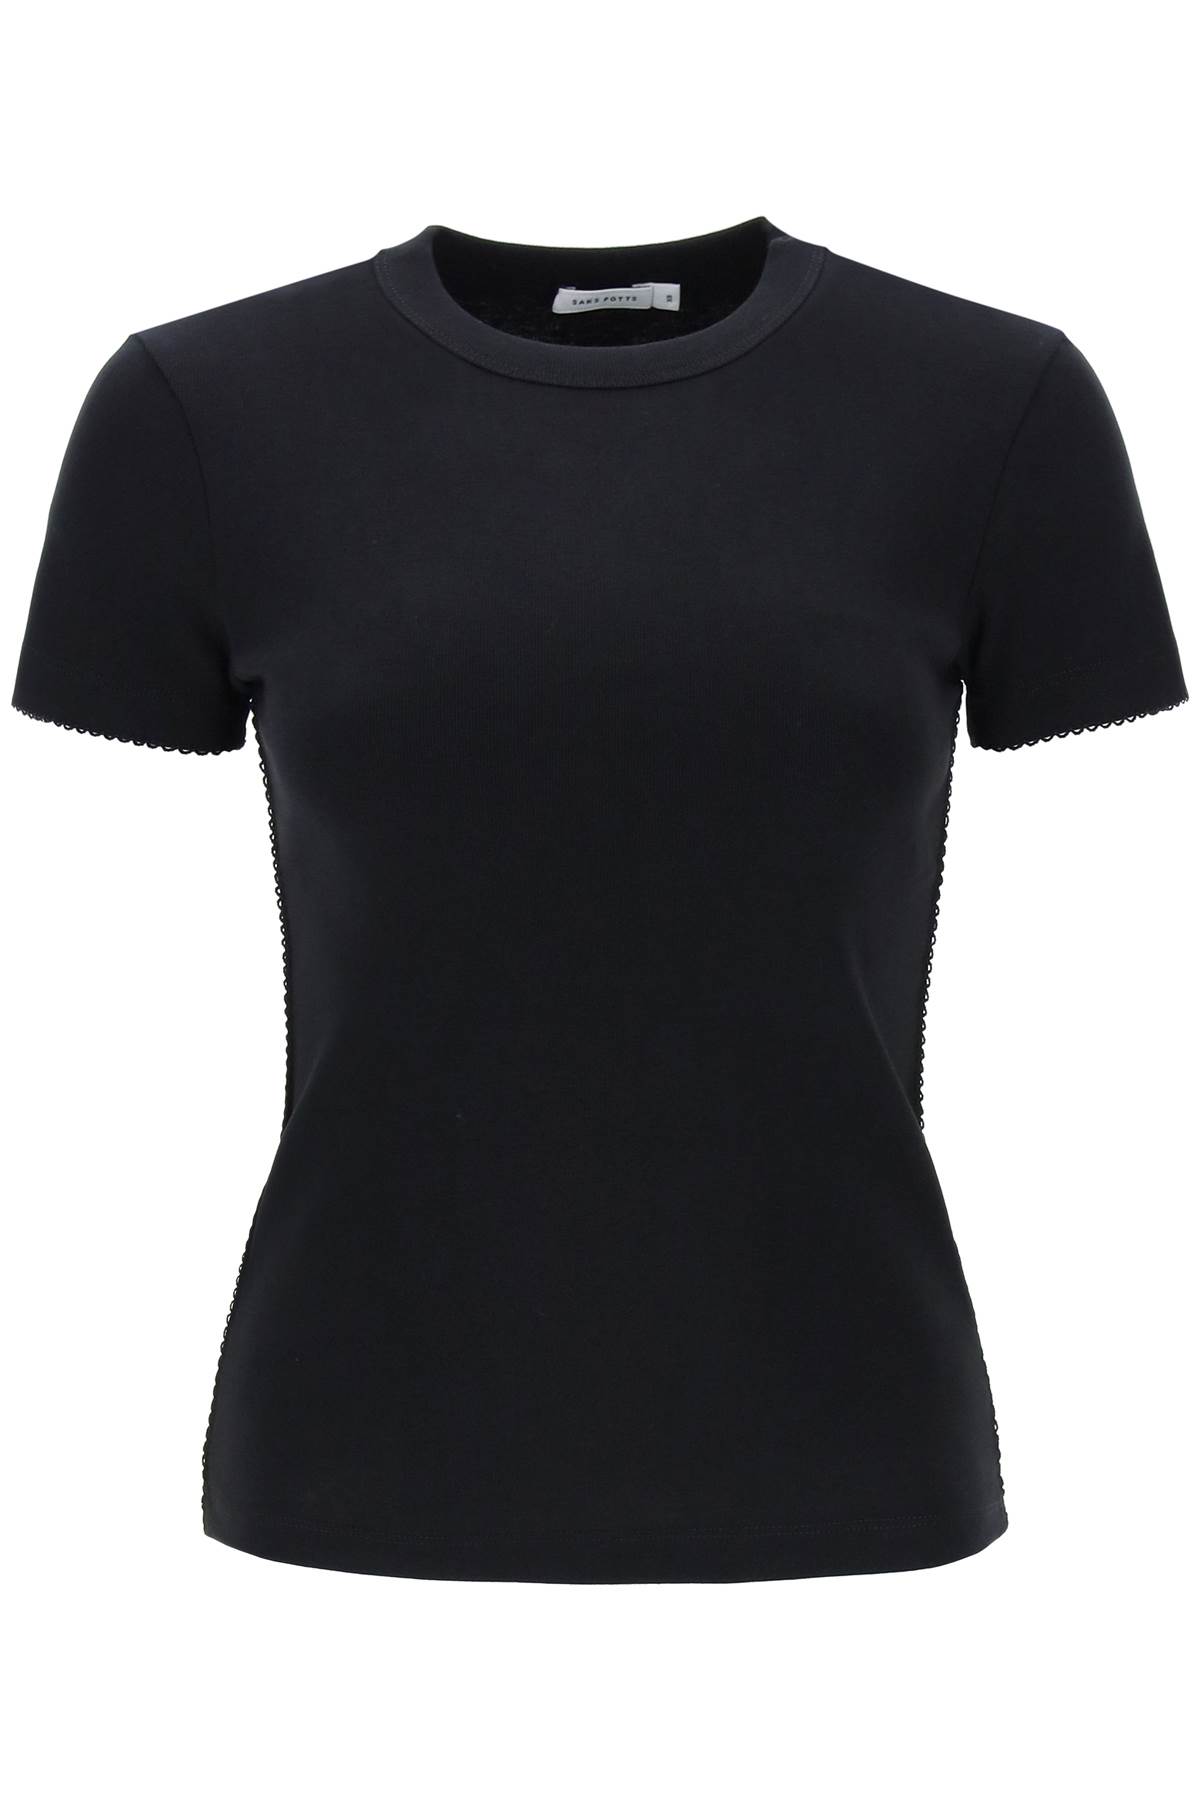 Premiata Uma T-shirt With Picot Details In Black